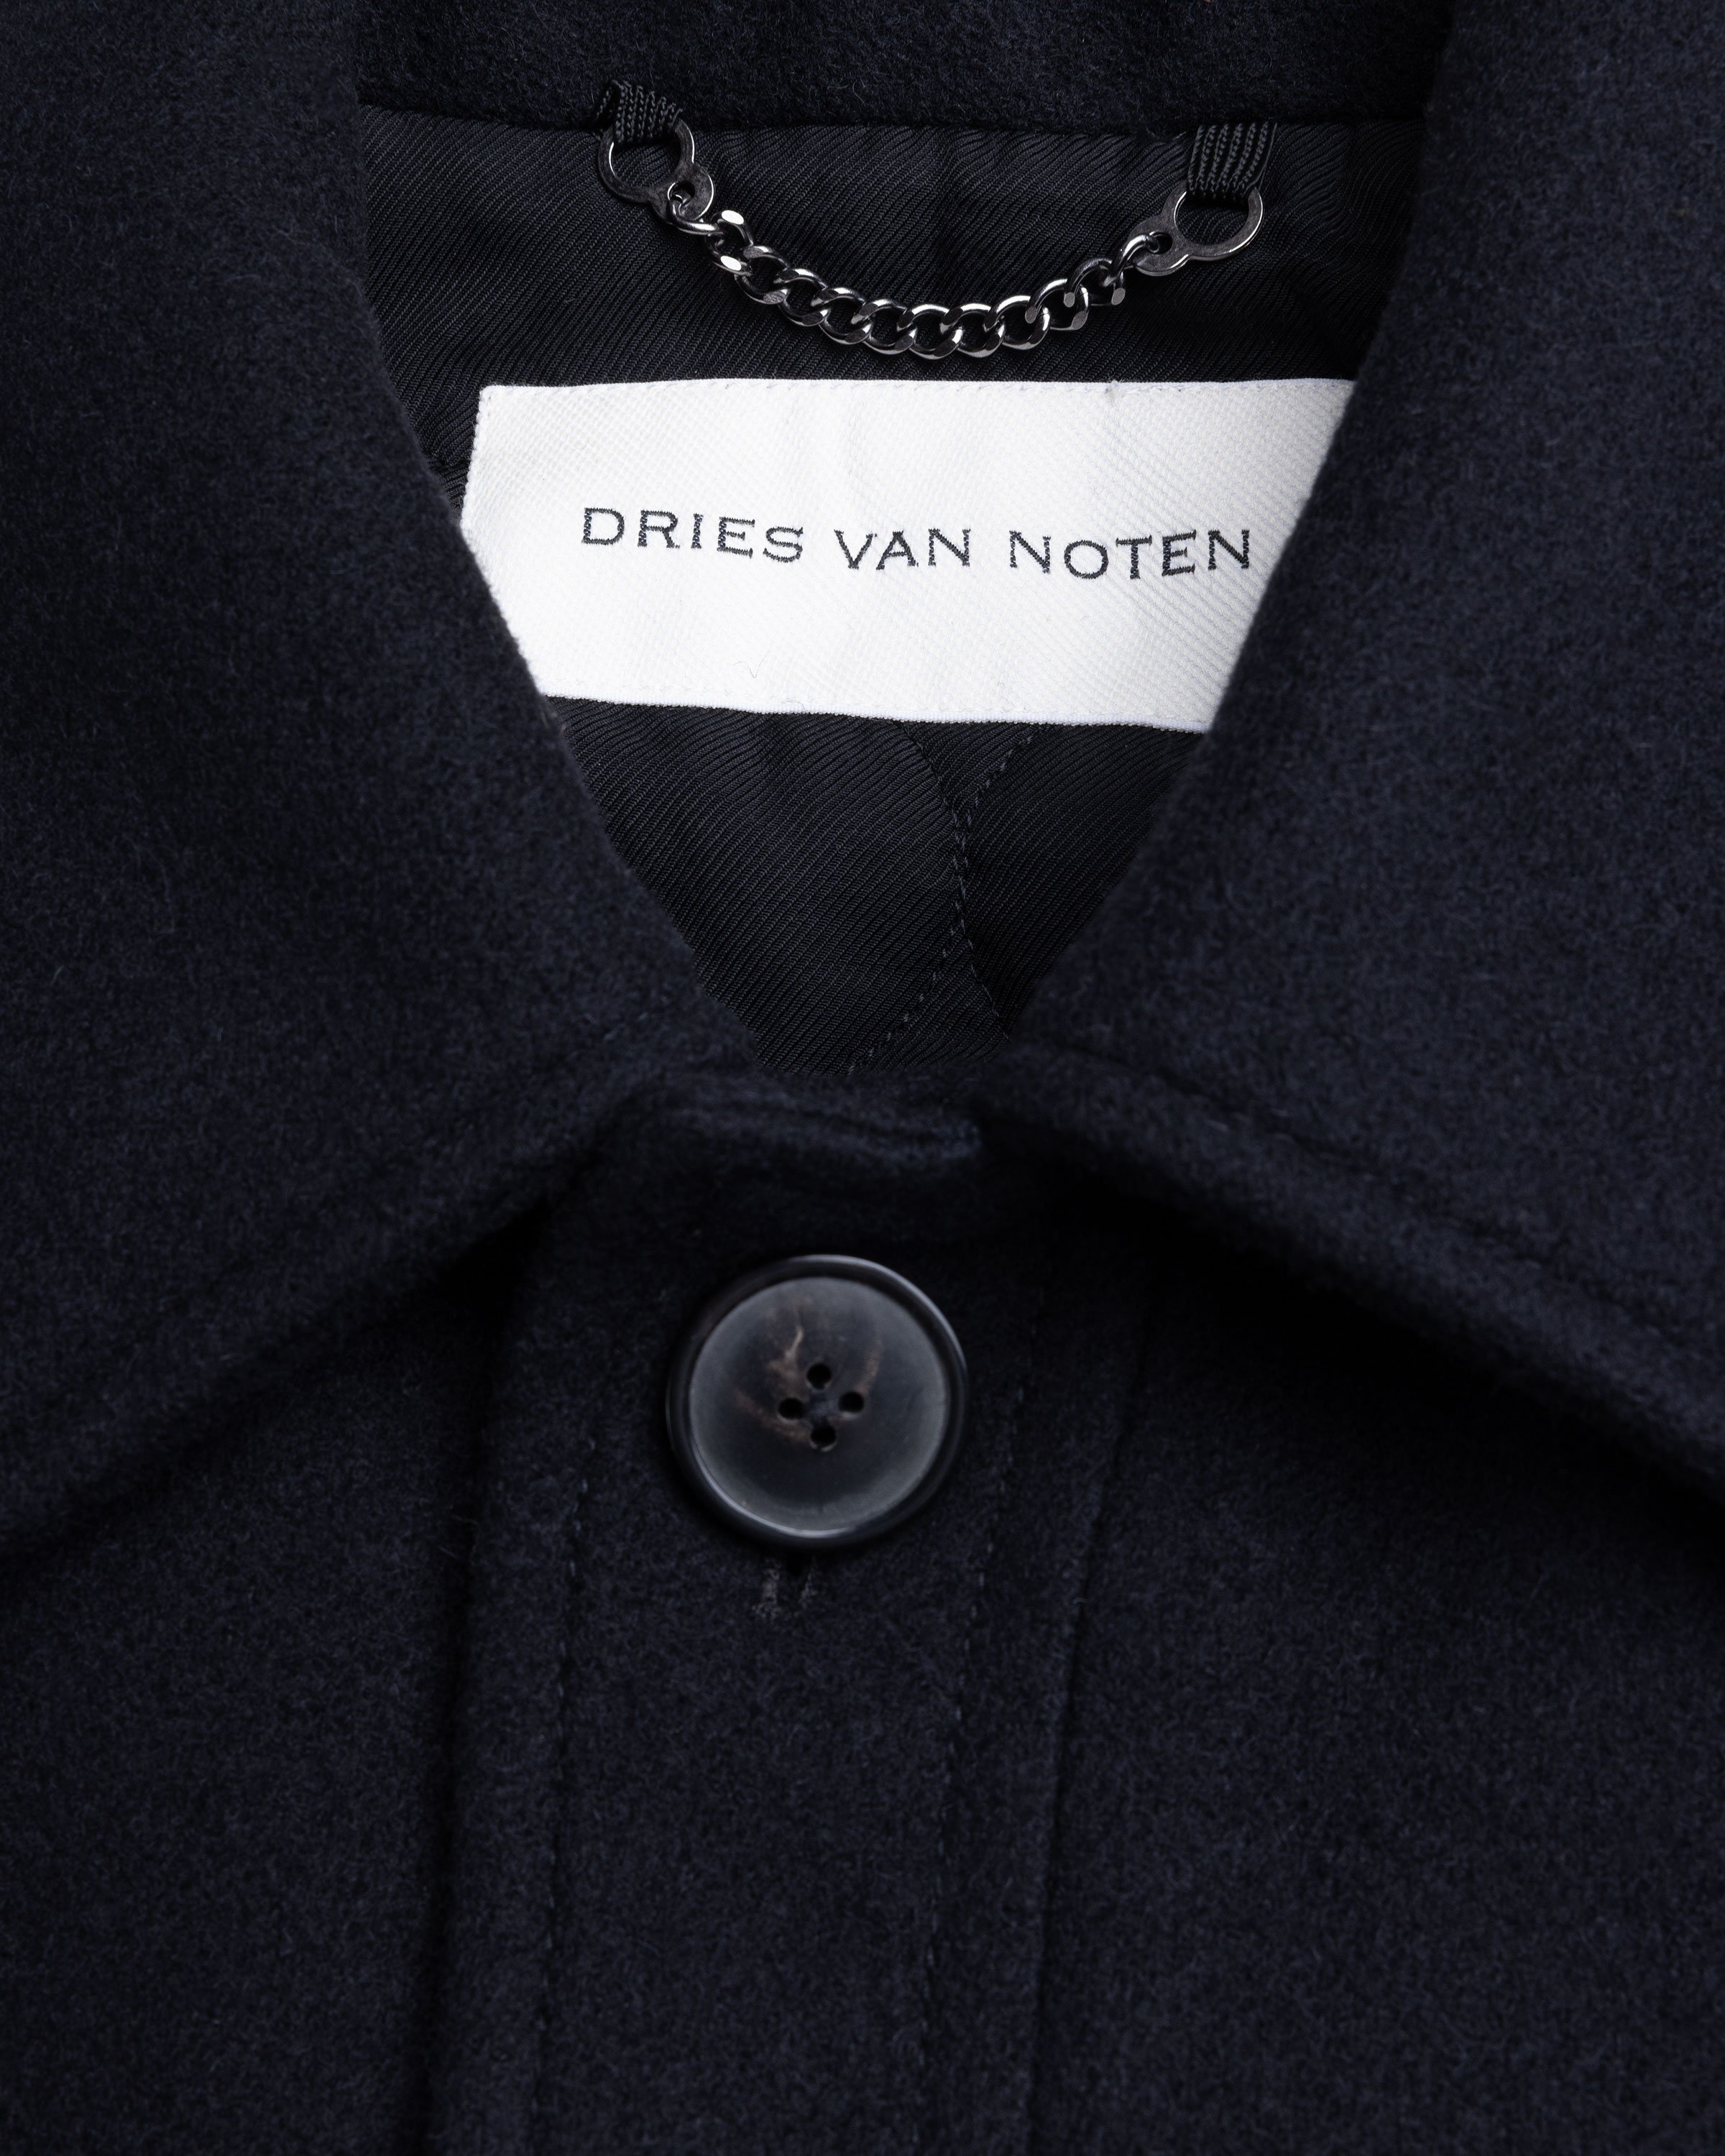 Dries van Noten – Valko Jacket Black - Jackets - Black - Image 5